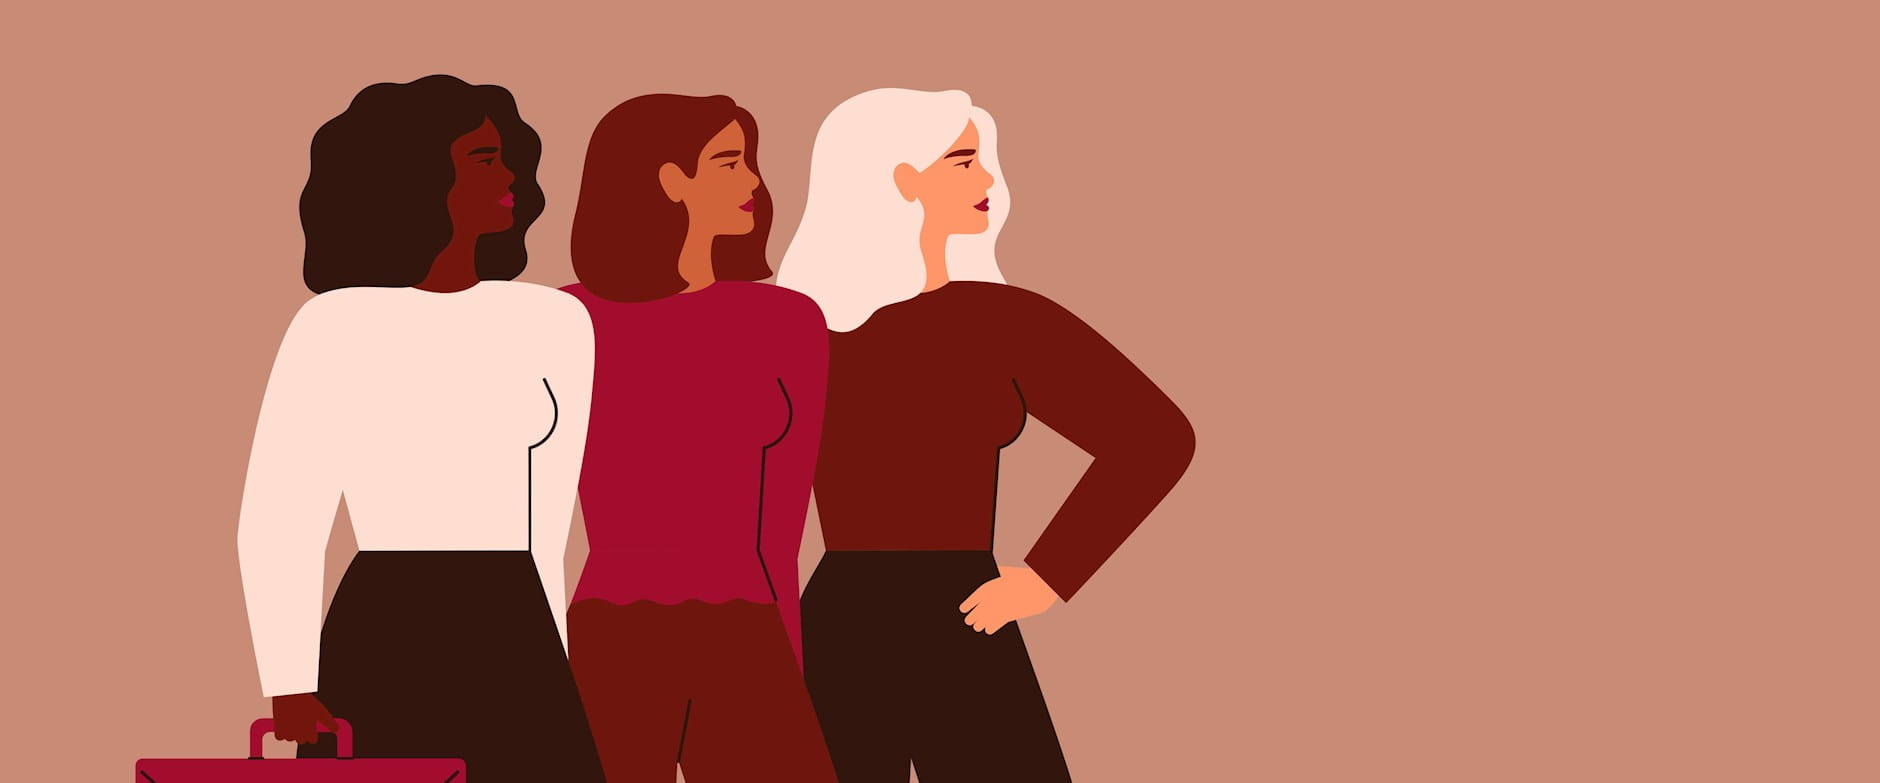 Illustration of three women